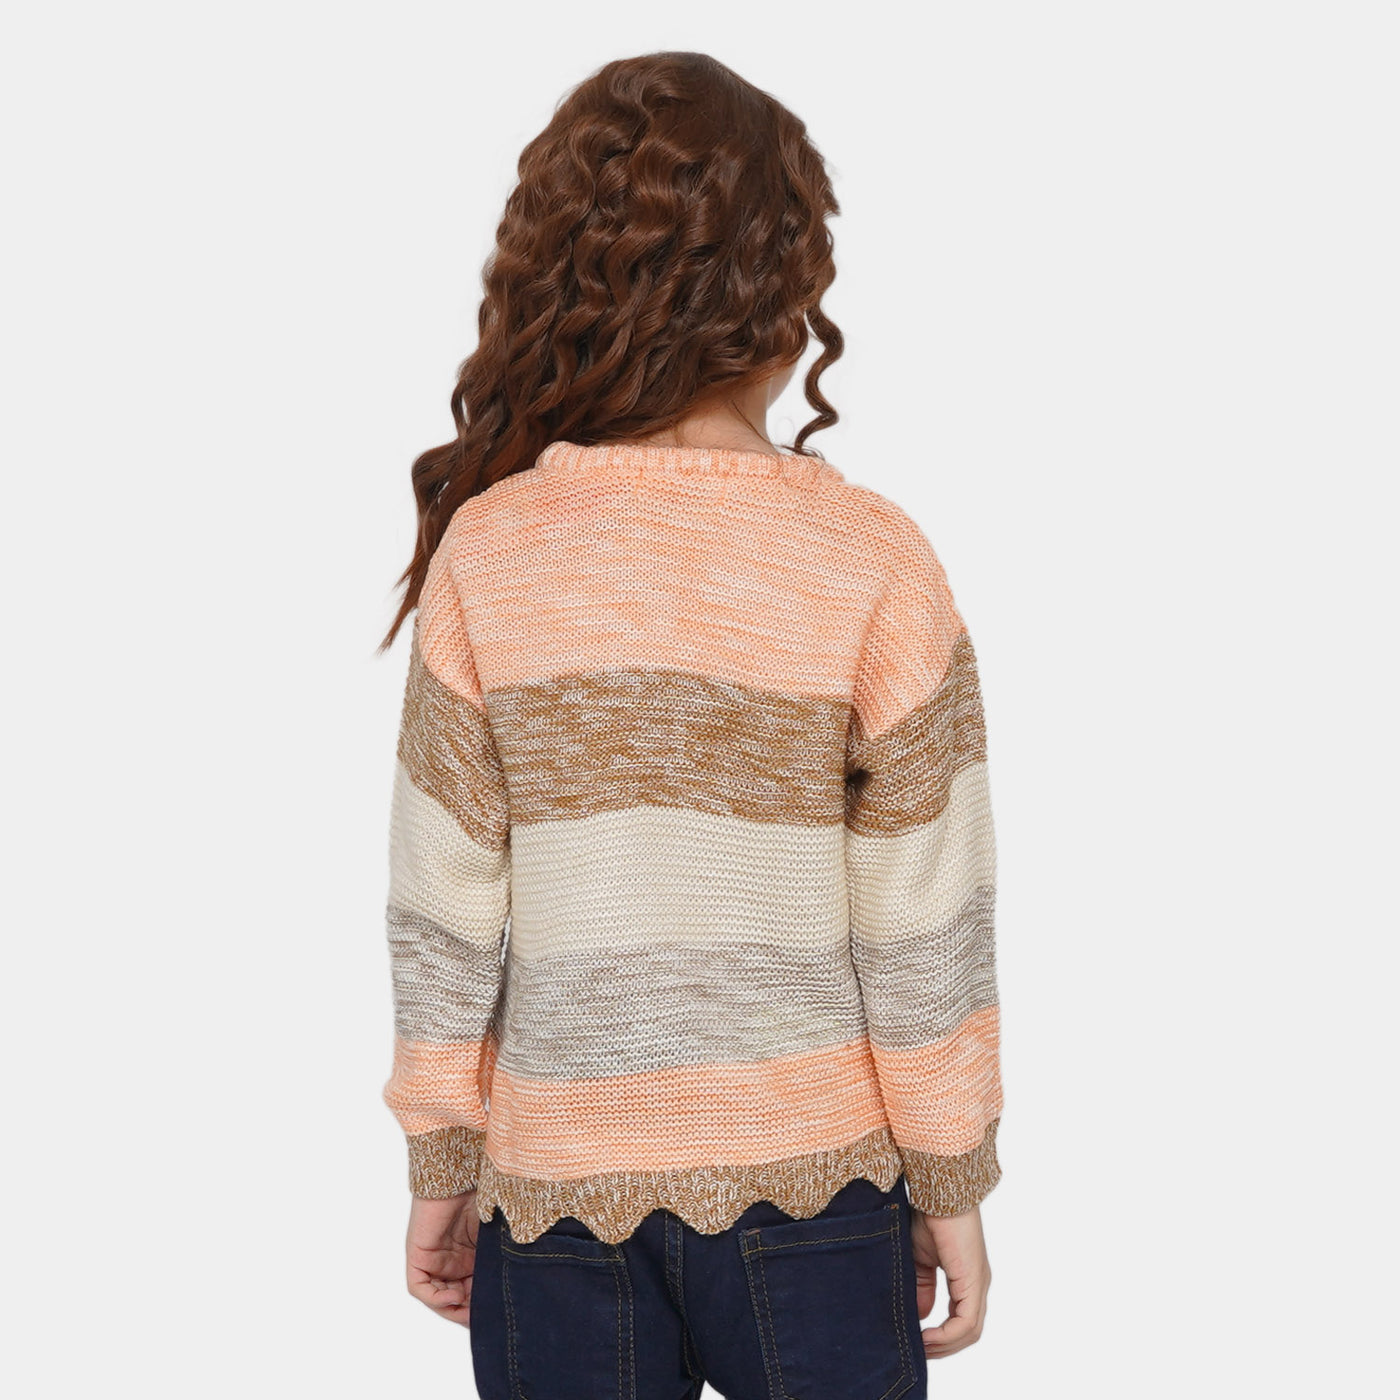 Girls Sweater BP29-22 - Multi